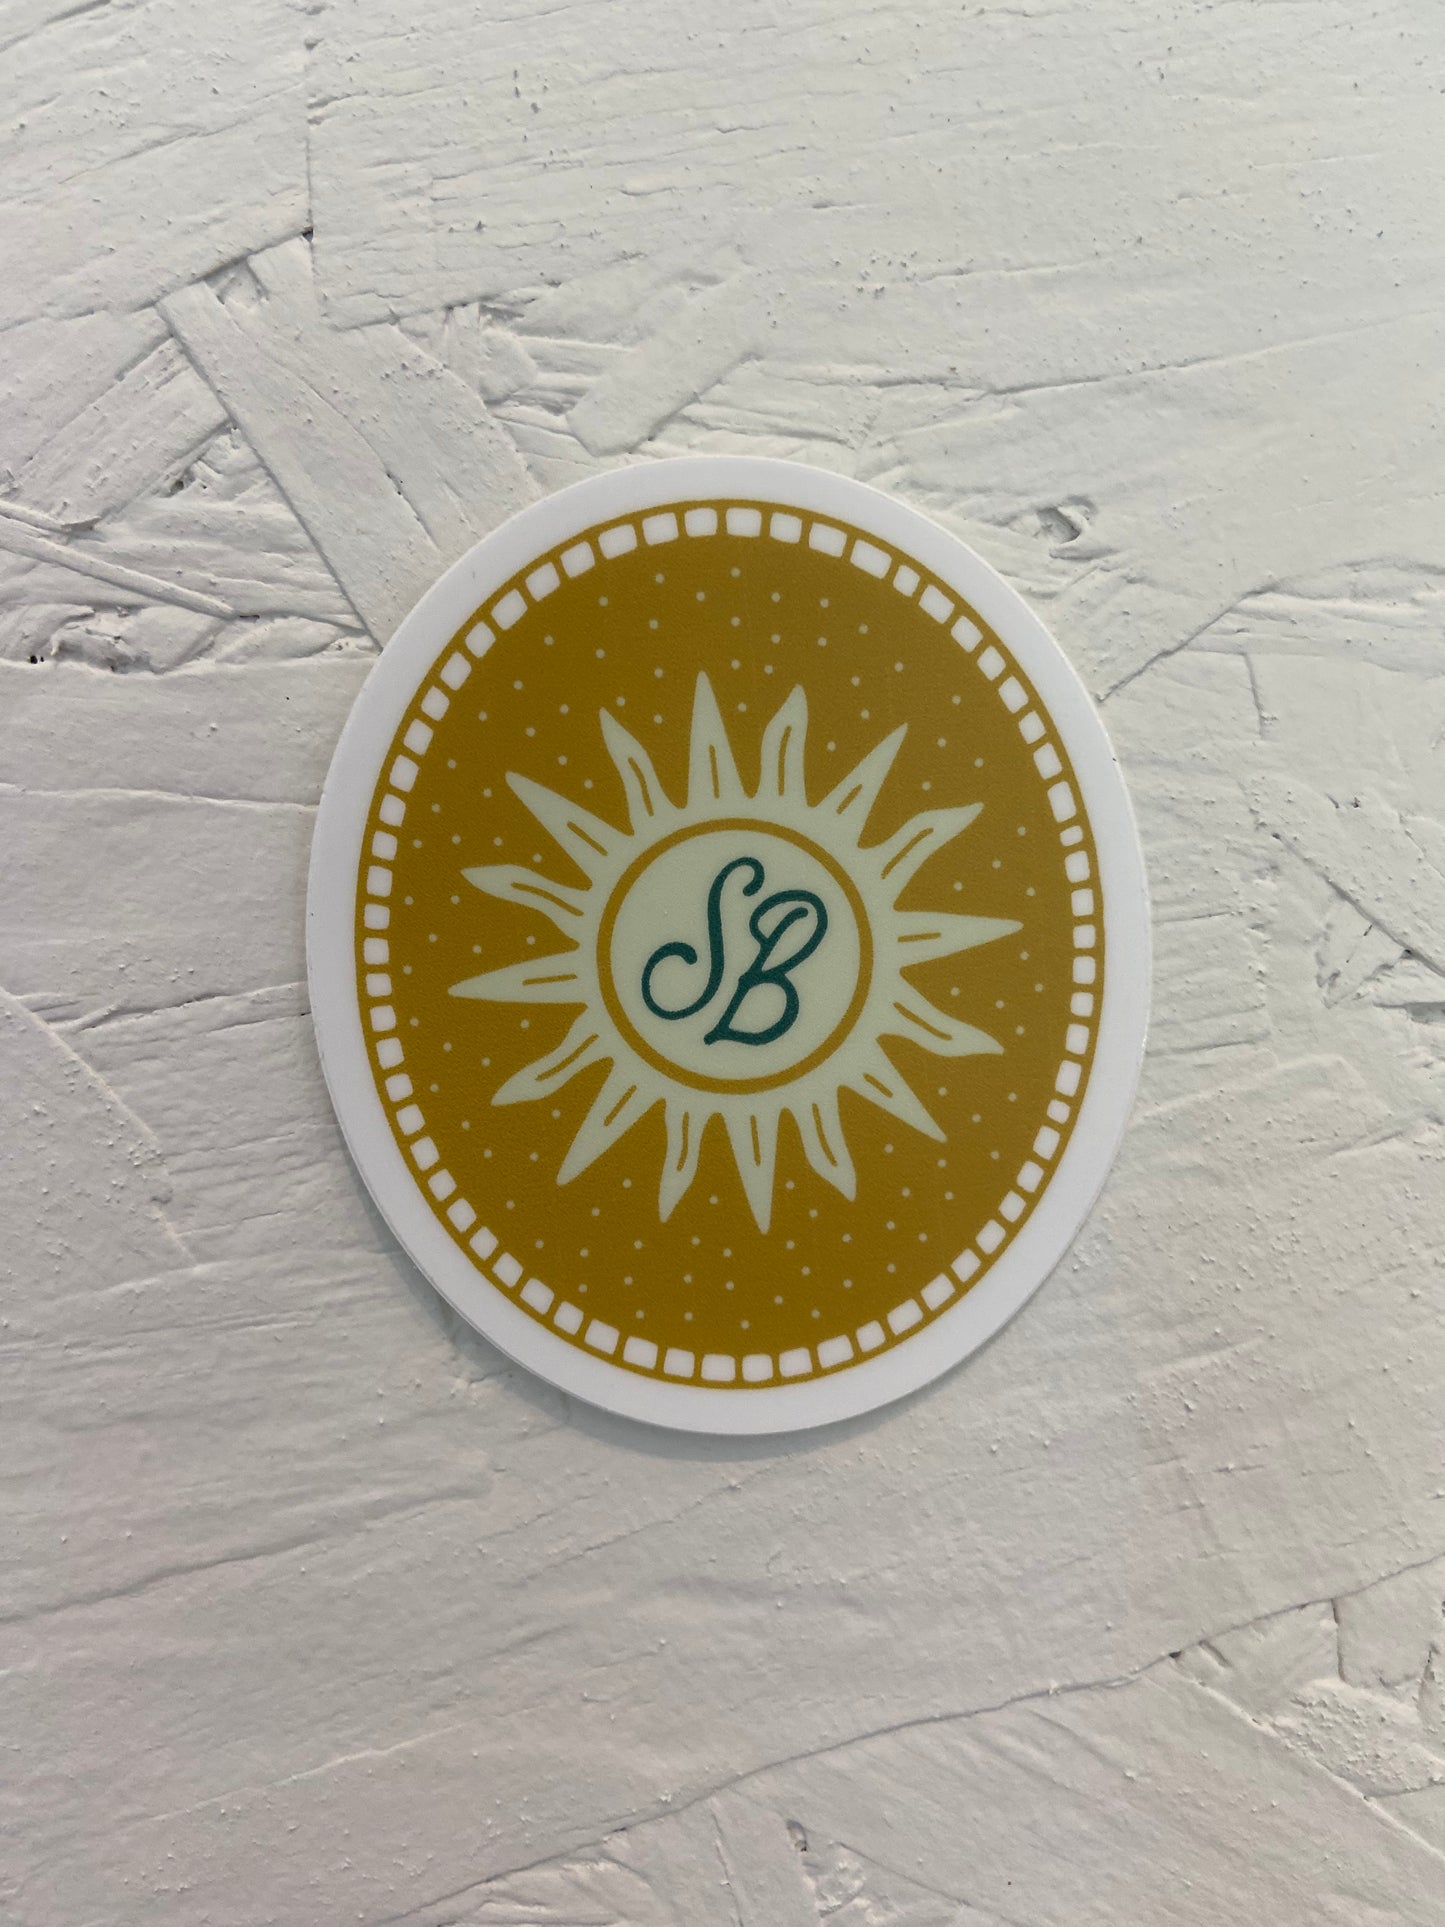 Oval "SB" Sticker